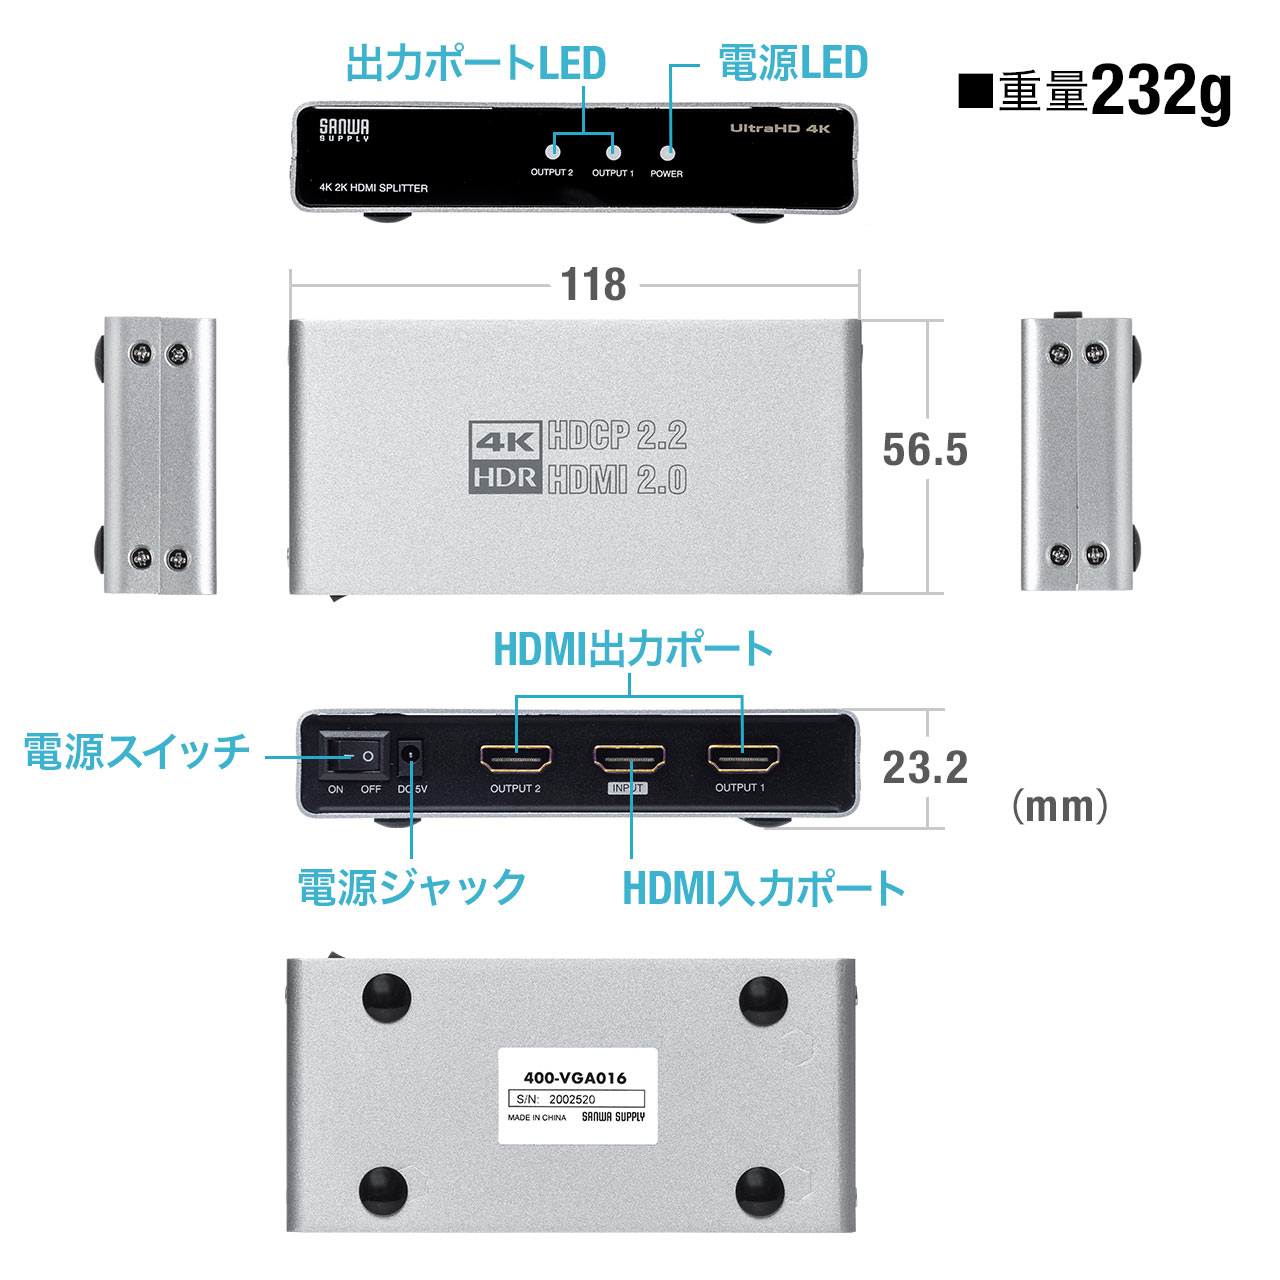 HDMIz 1 2o Xvb^[ 4K/60Hz HDRΉ HDCP2.2 400-VGA016